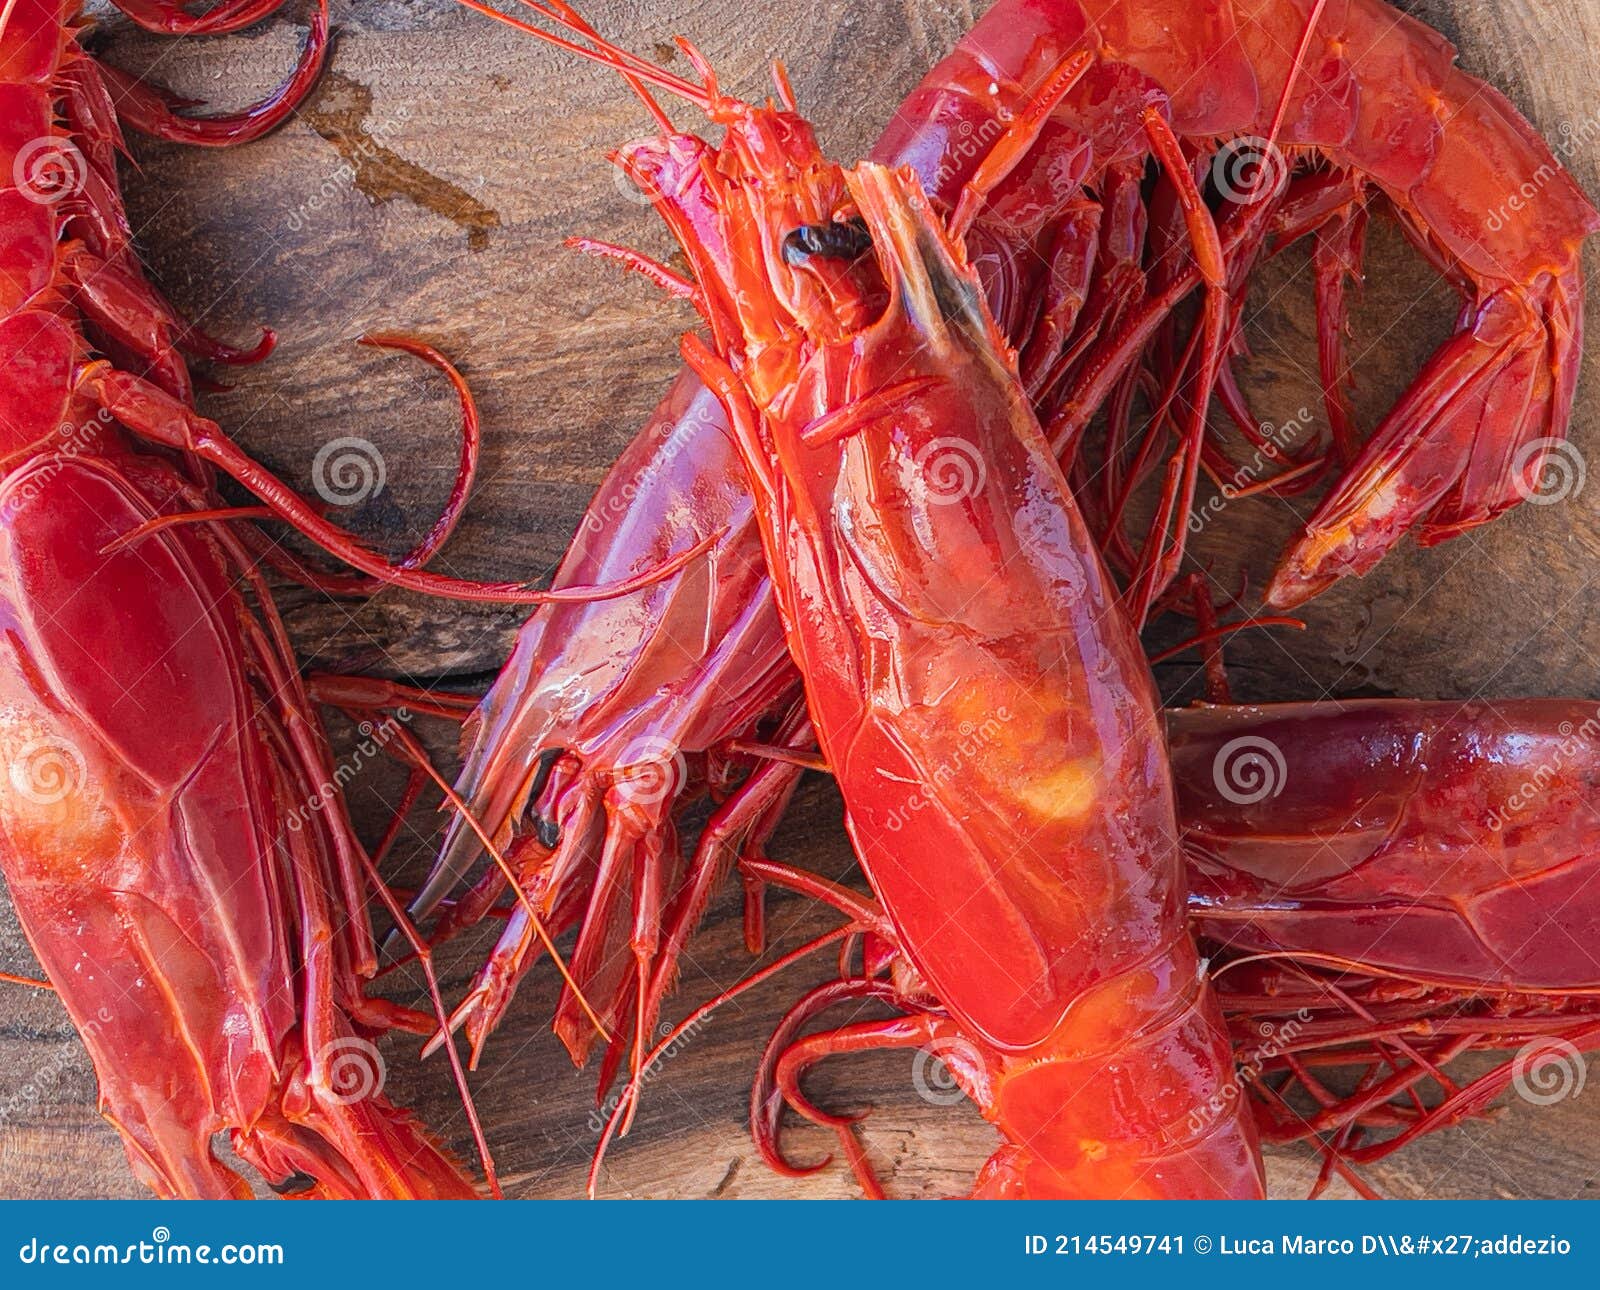 Afvise medier Legitimationsoplysninger Fresh Raw Giant Red Carabineros Prawns Stock Image - Image of delicacy,  crustacean: 214549741